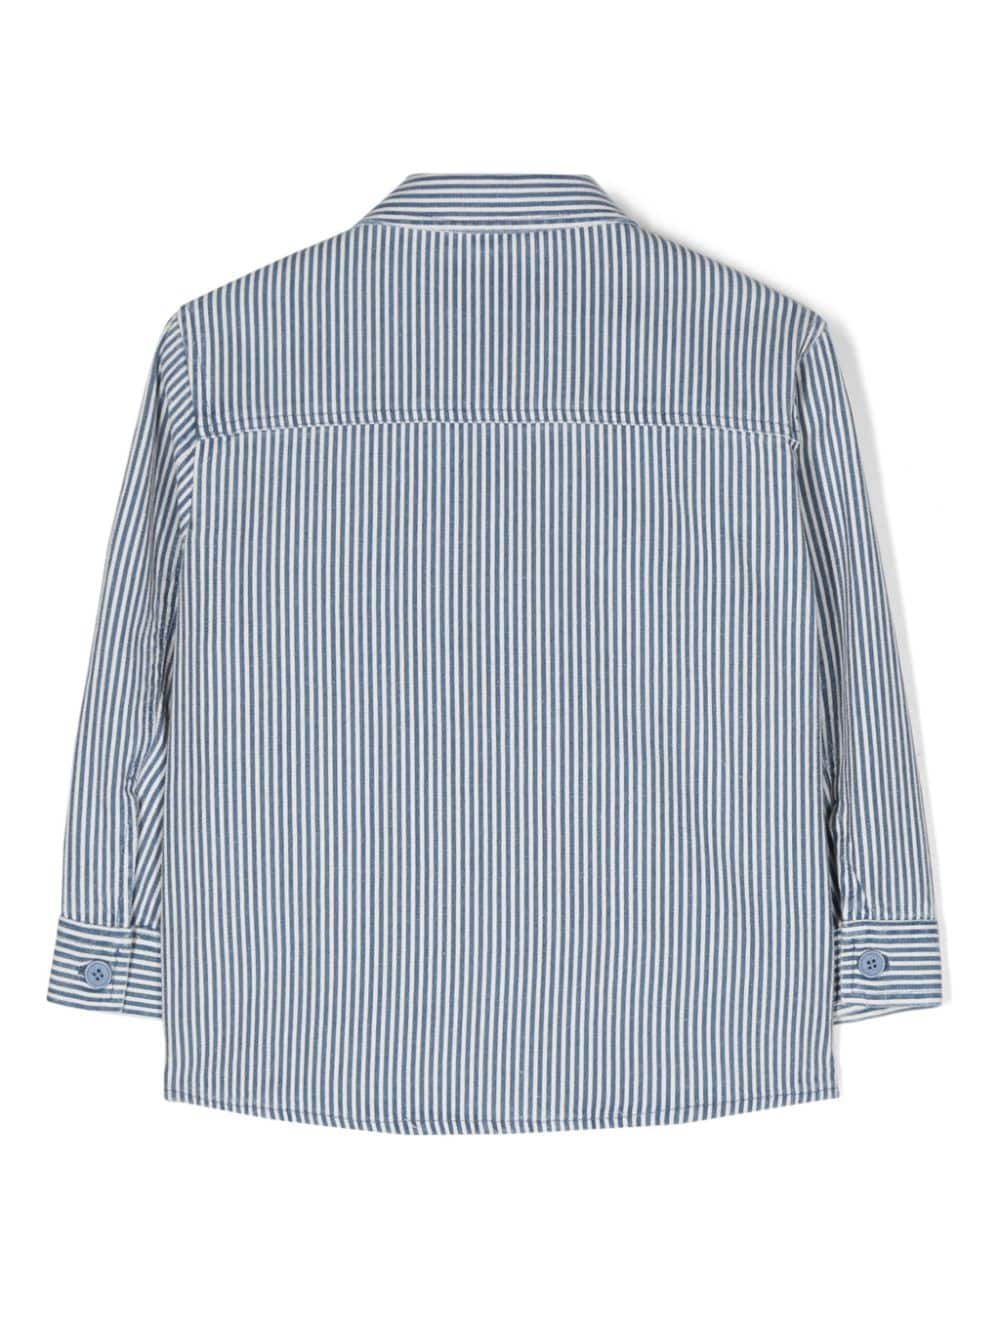 Il Gufo striped shirt jacket - Blauw